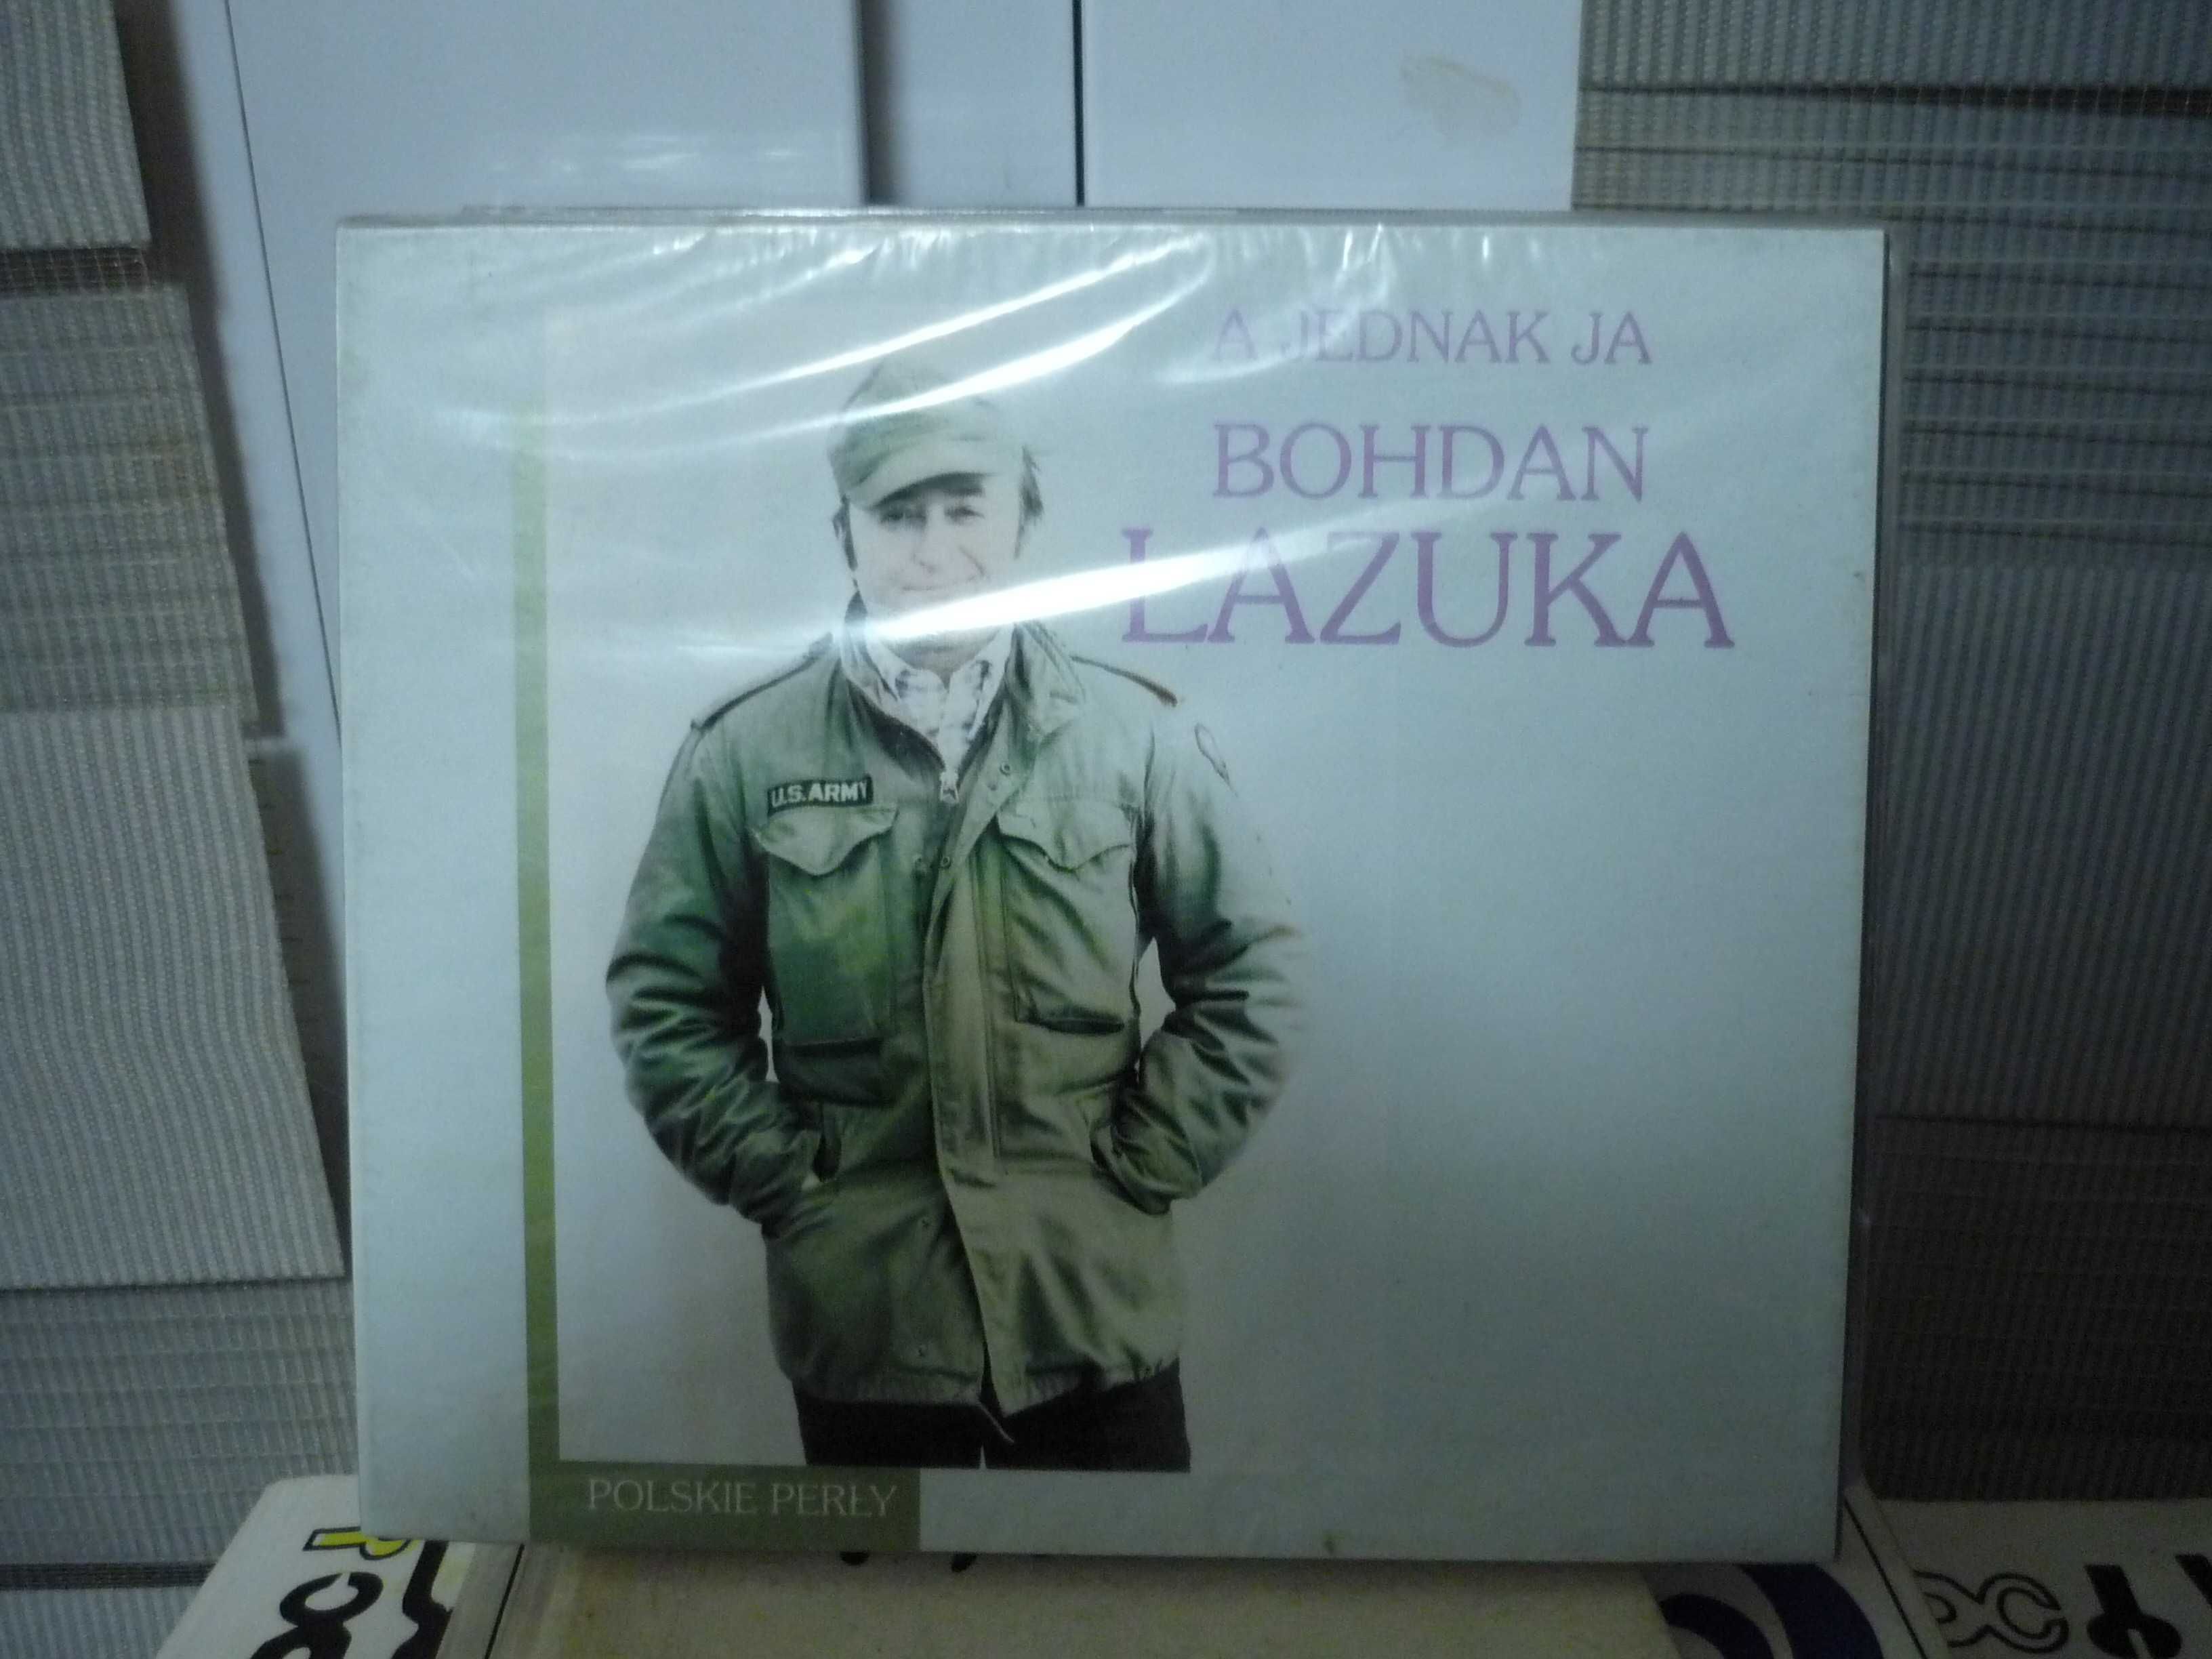 Bohdan Łazuka : A jednak ja , CD . Folia